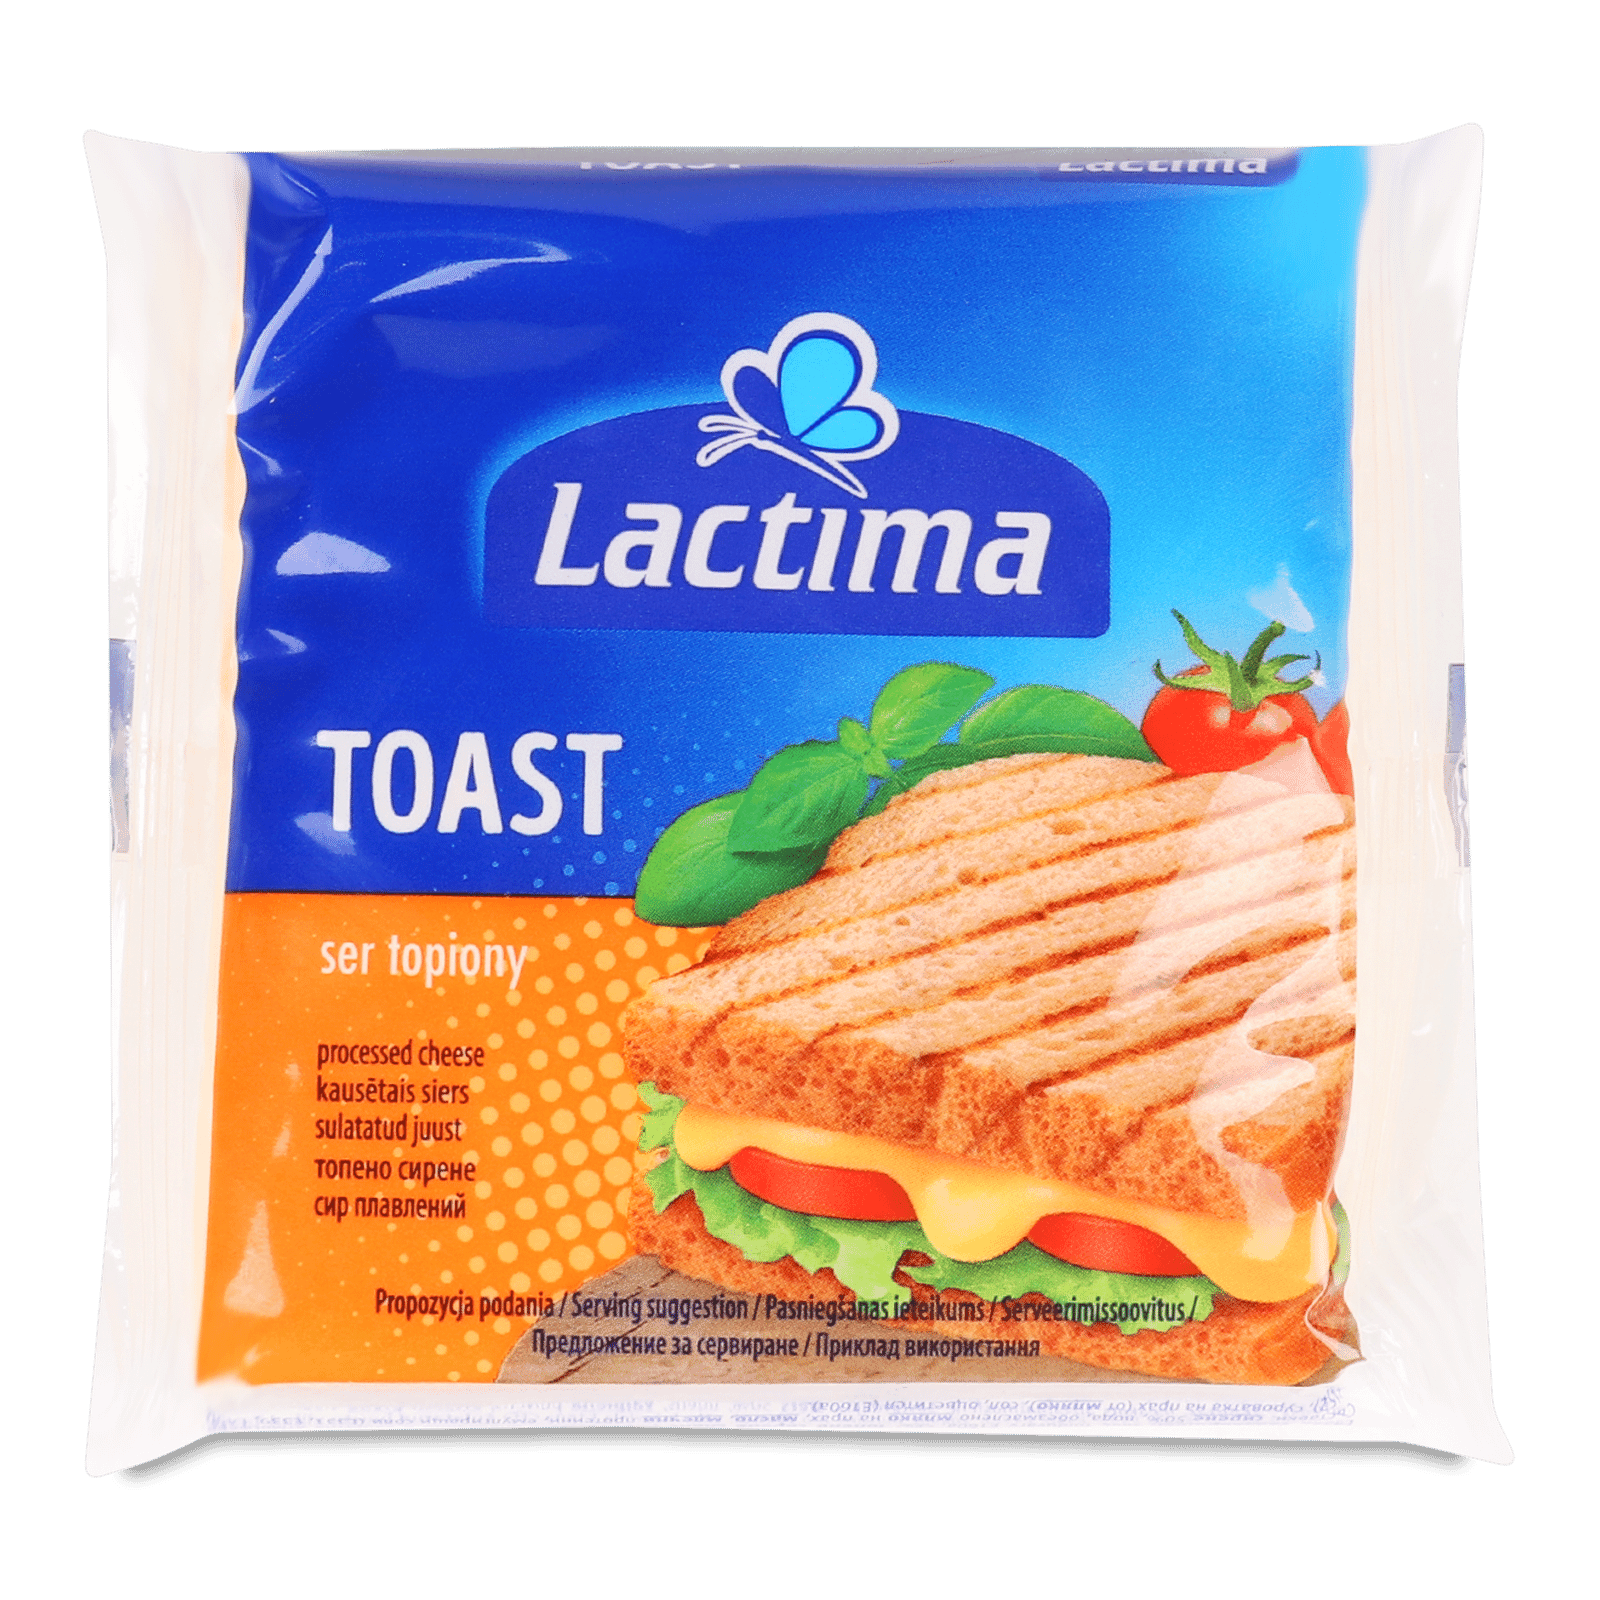 Сир плавлений Lactima тостовий 35% скибочками - 1